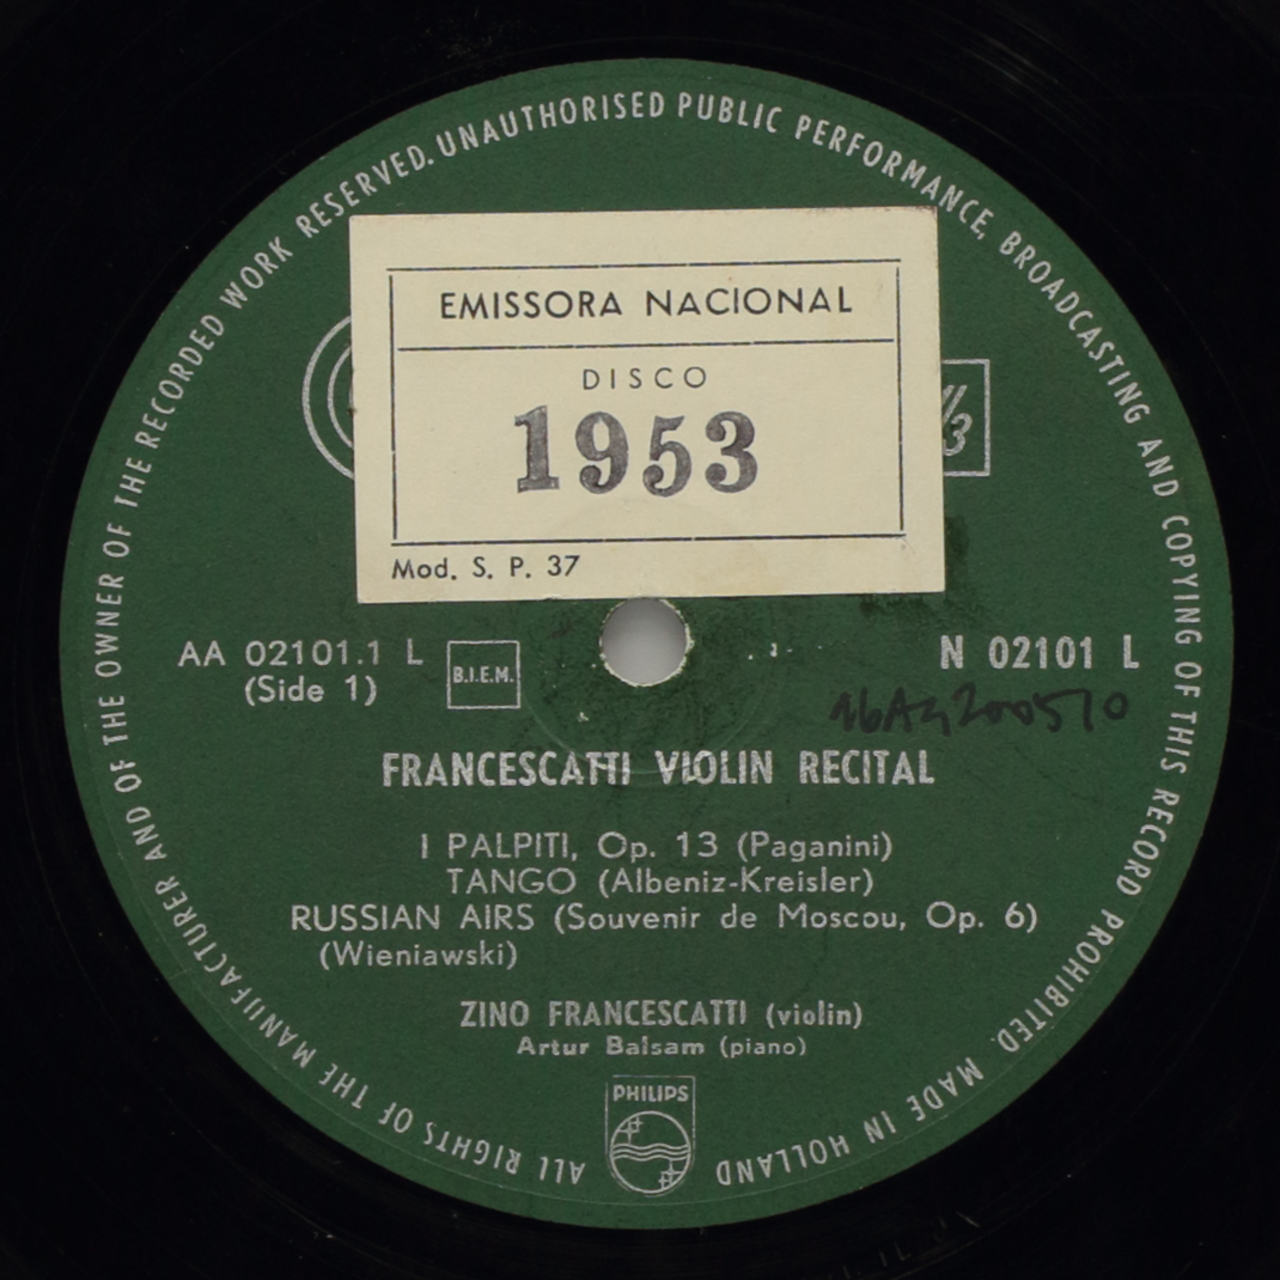 Francescatti Violin Recital